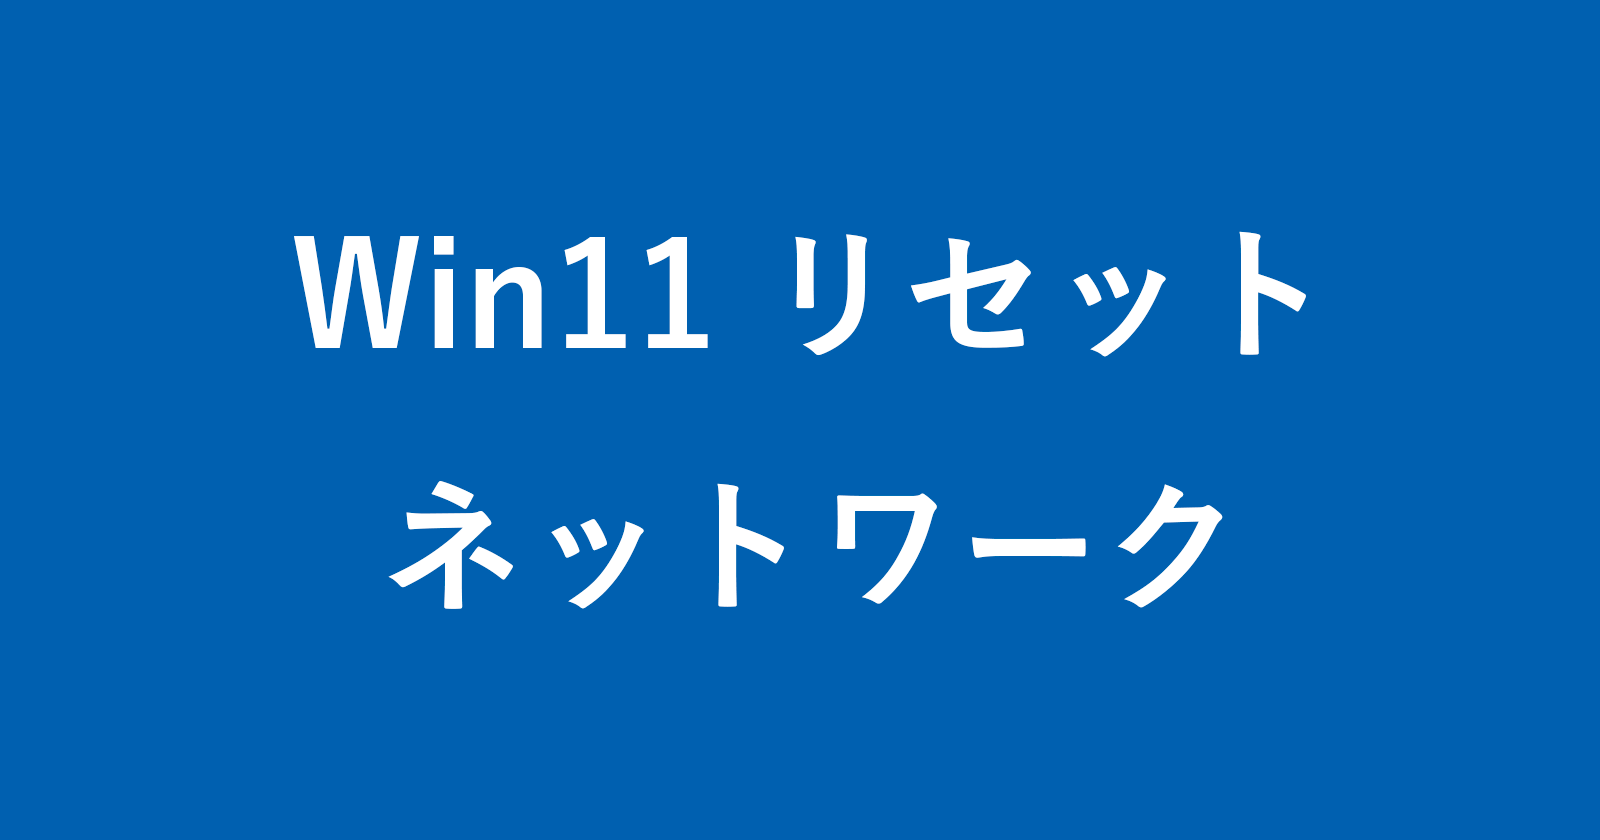 windows 11 reset network